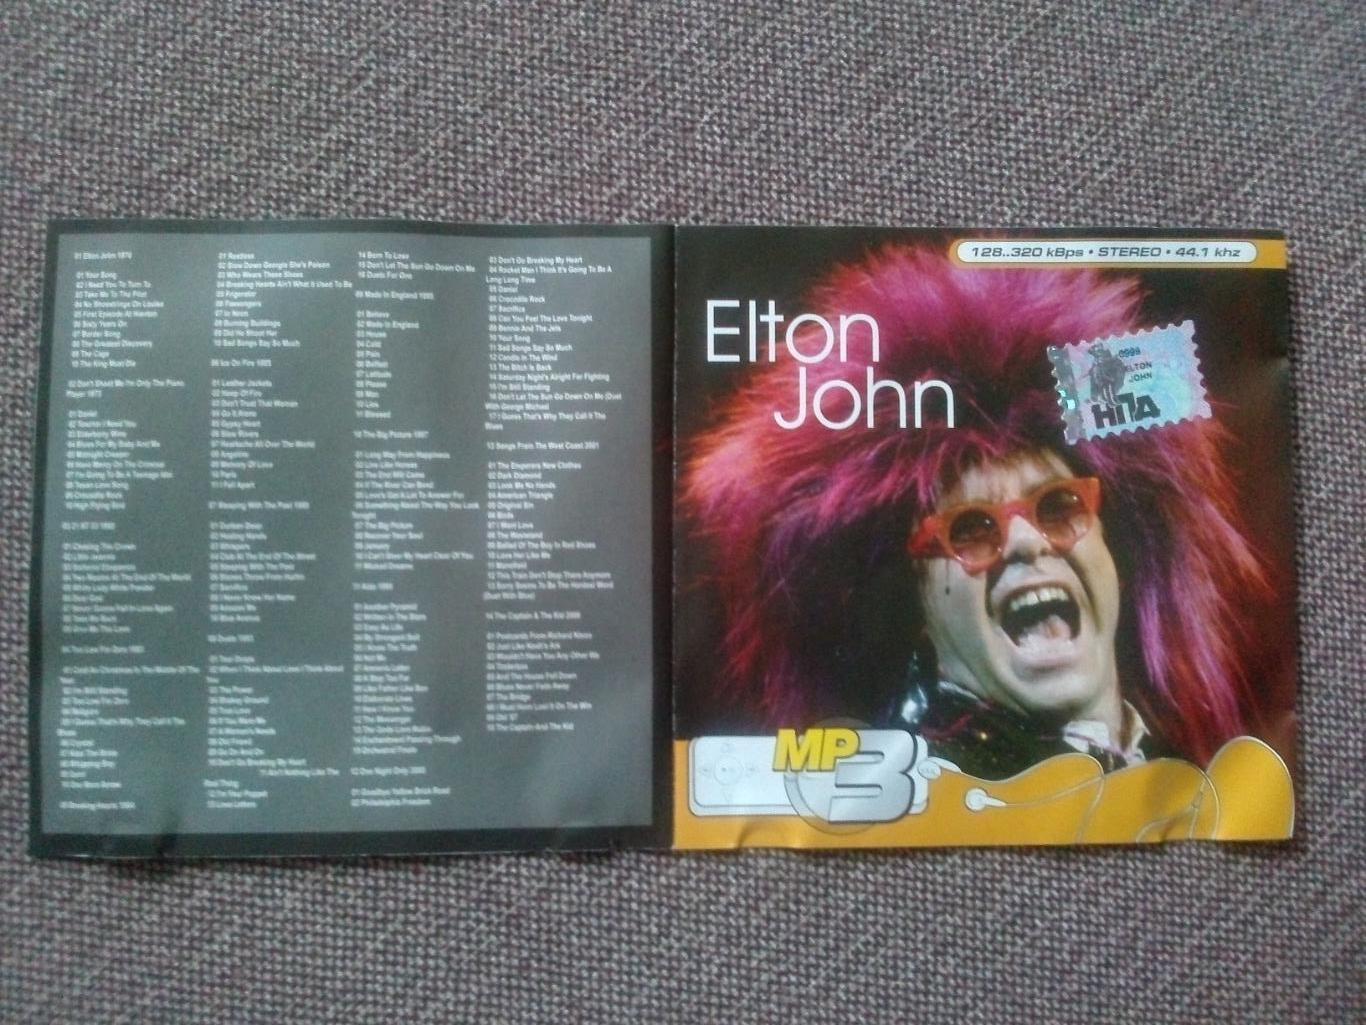 MP - 3 CD диск : Elton John (Элтон Джон) 1970 - 2006 гг. (14 альбомов) Рок 2